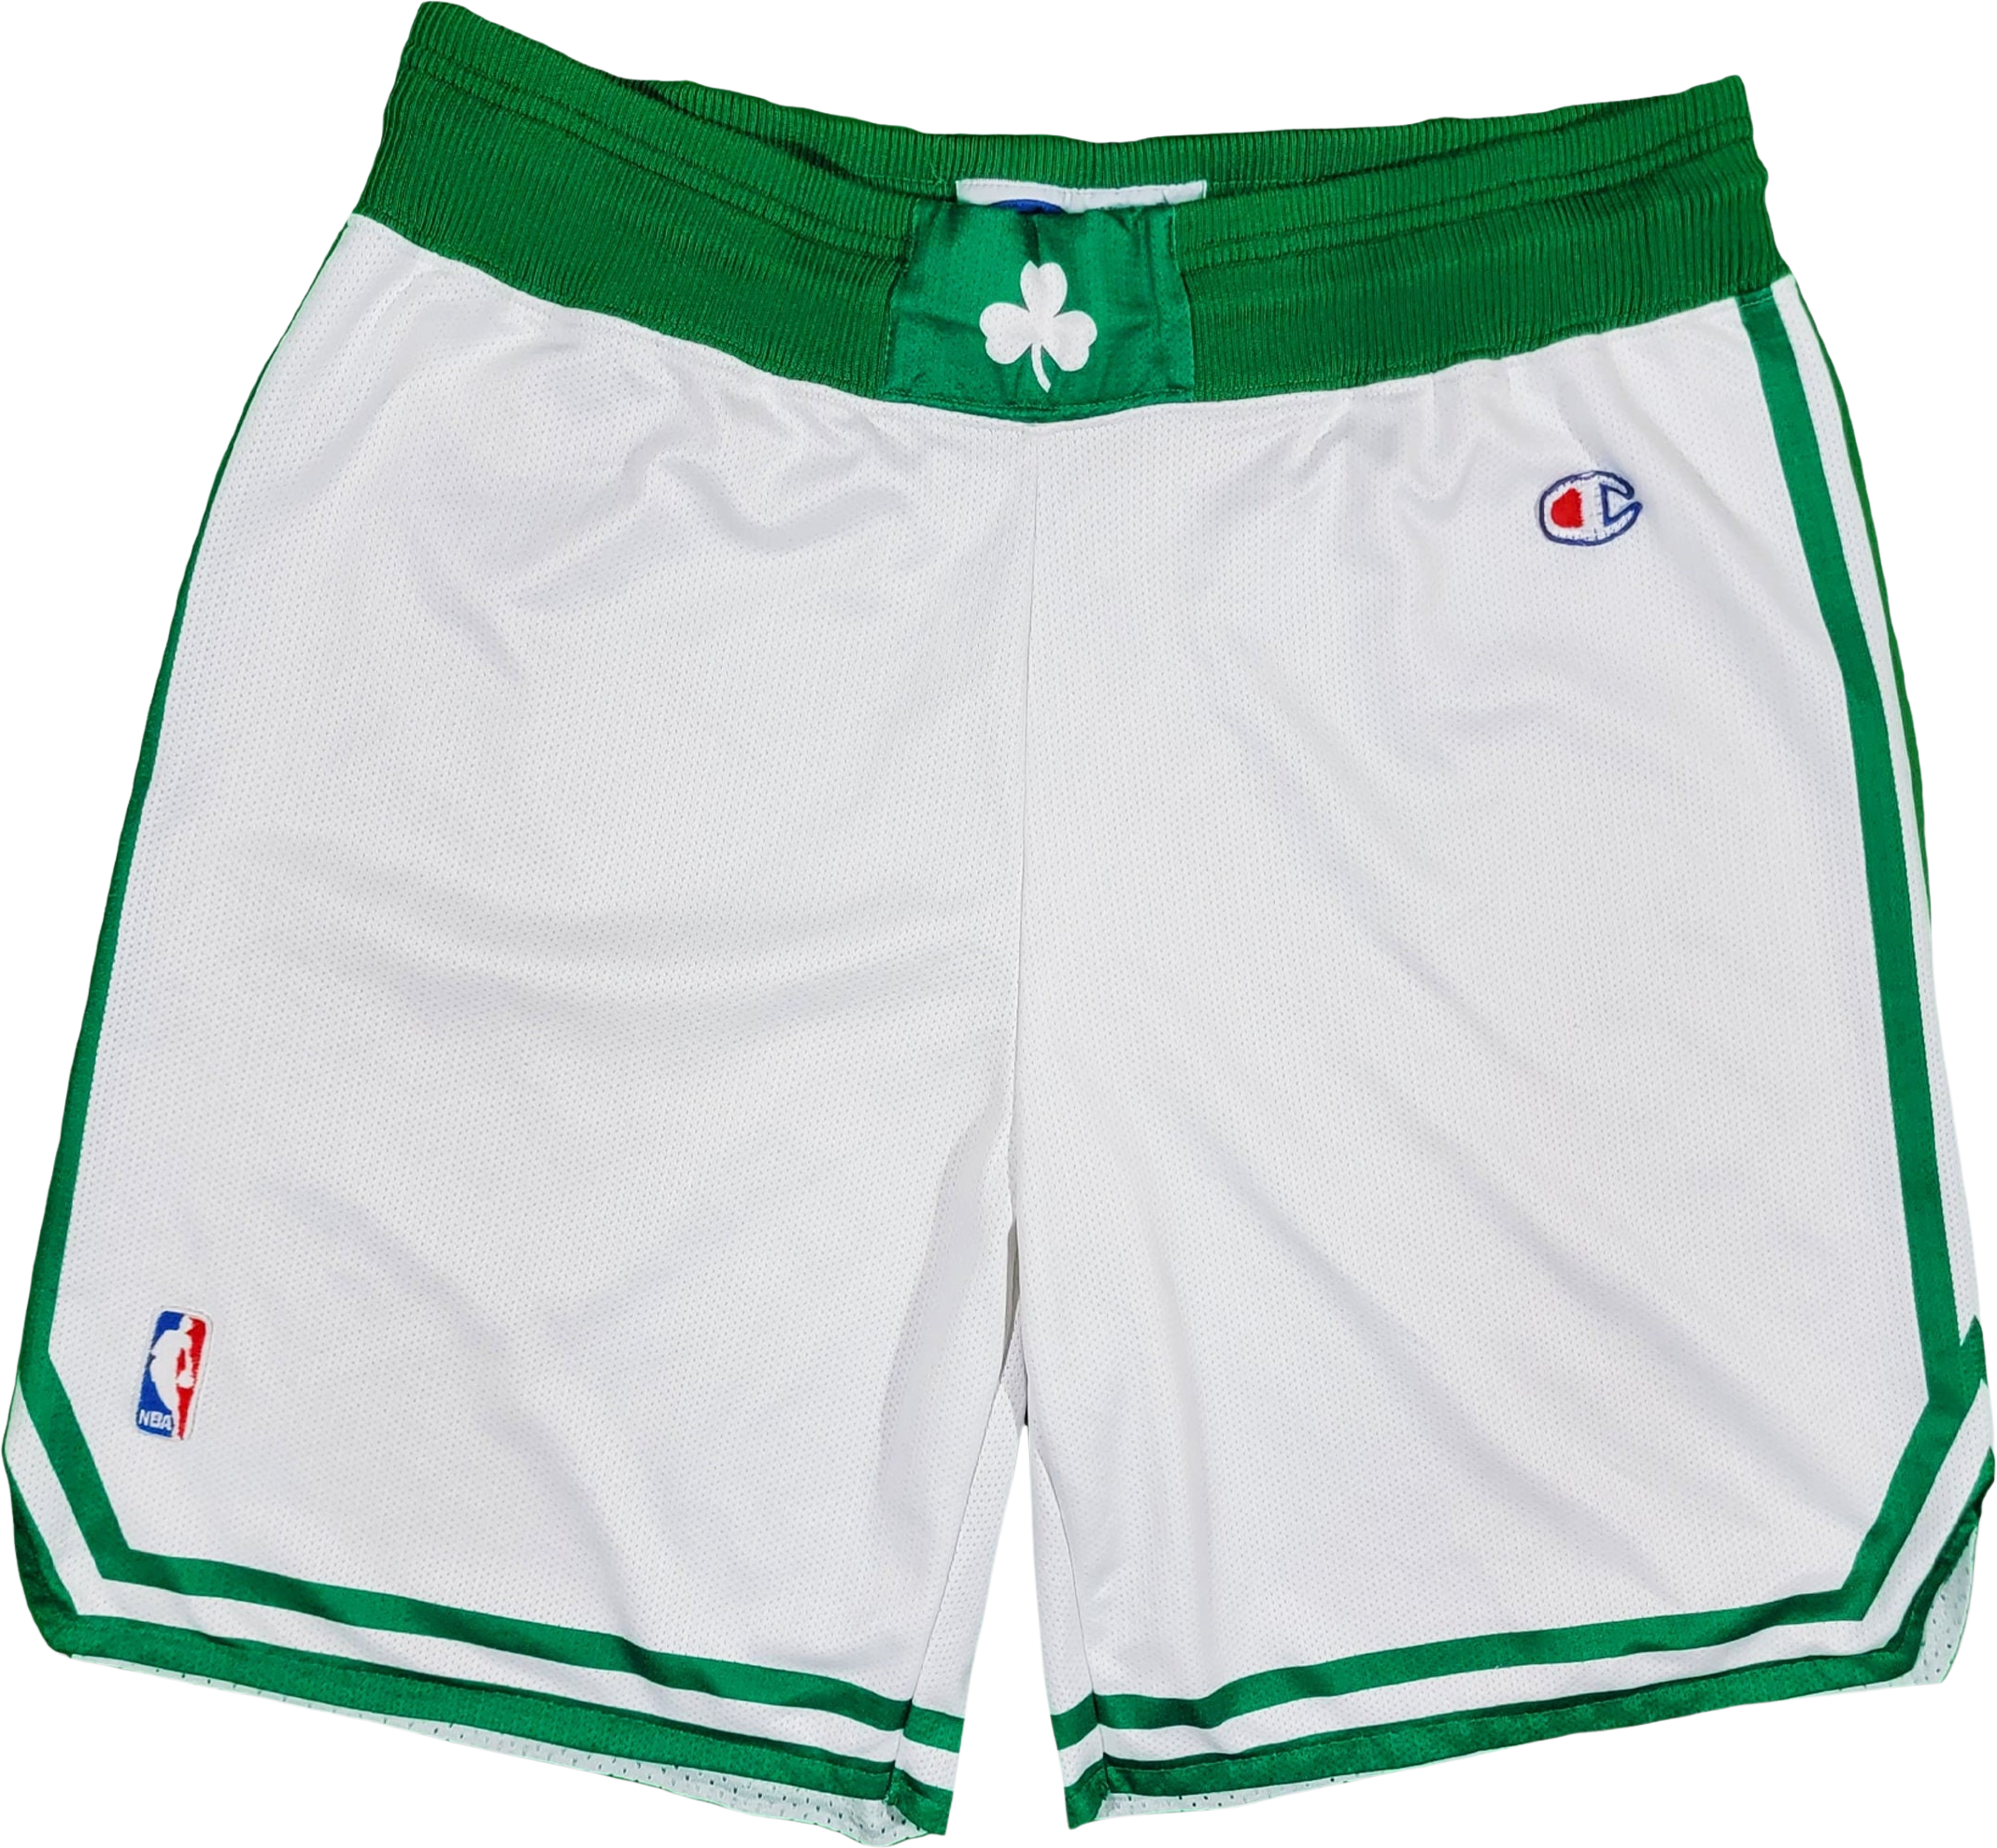 Boston Celtics Vintage Champion Basketball Shorts Nba Uniform Bottoms